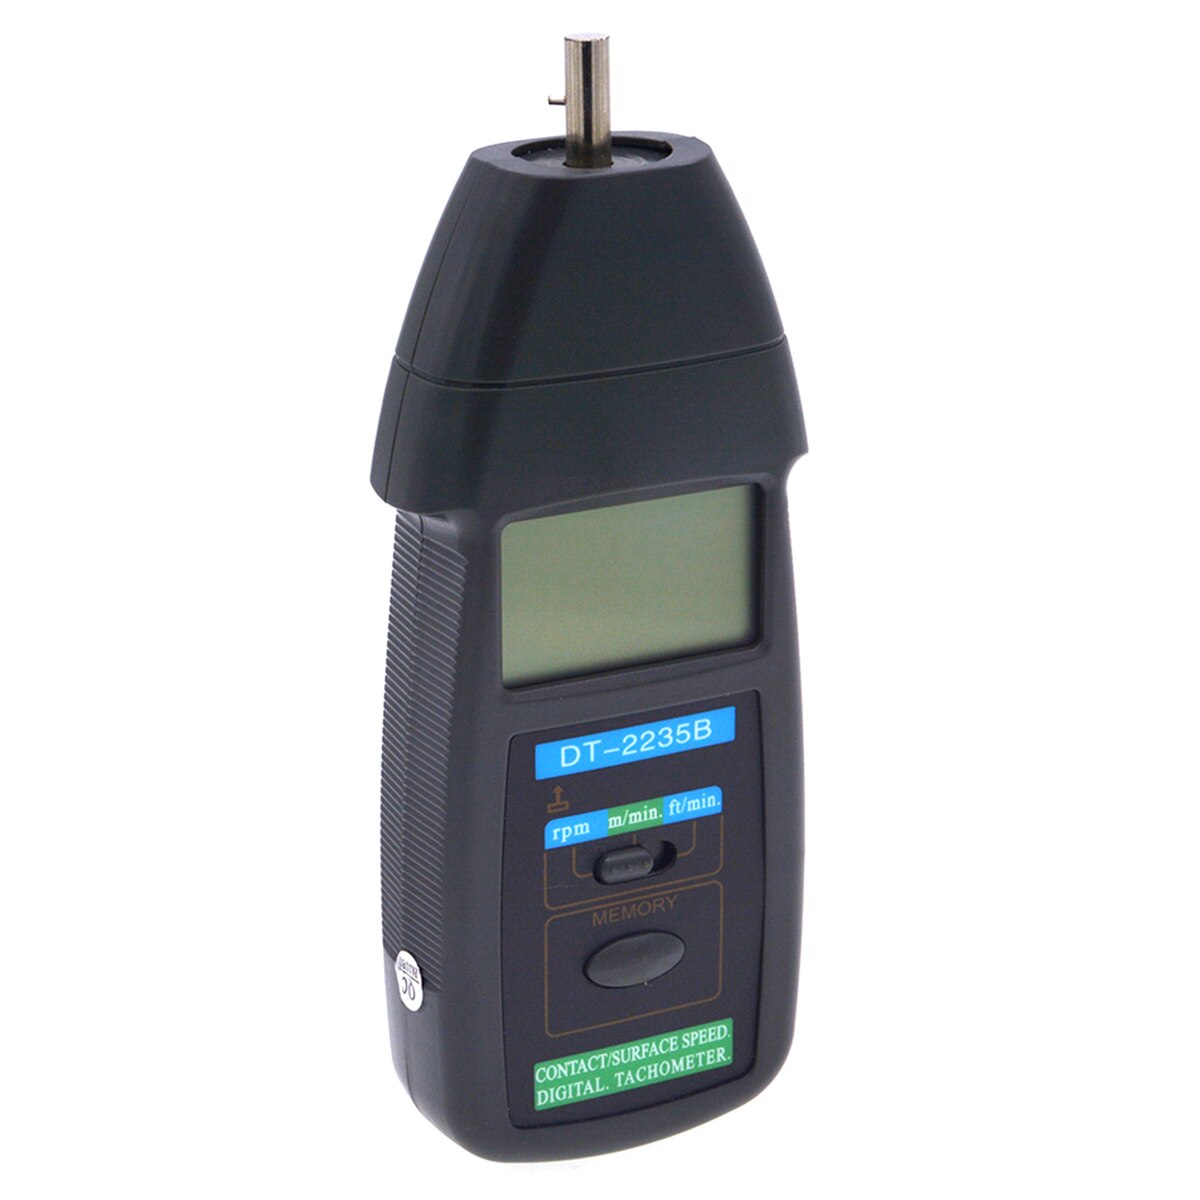 5 Cijfers Lcd Digital Contact Tachometer Rpm Tach Tester Meter Motor Speed Gauge Testen Handheld Foto Elektrische Test DT-2235A